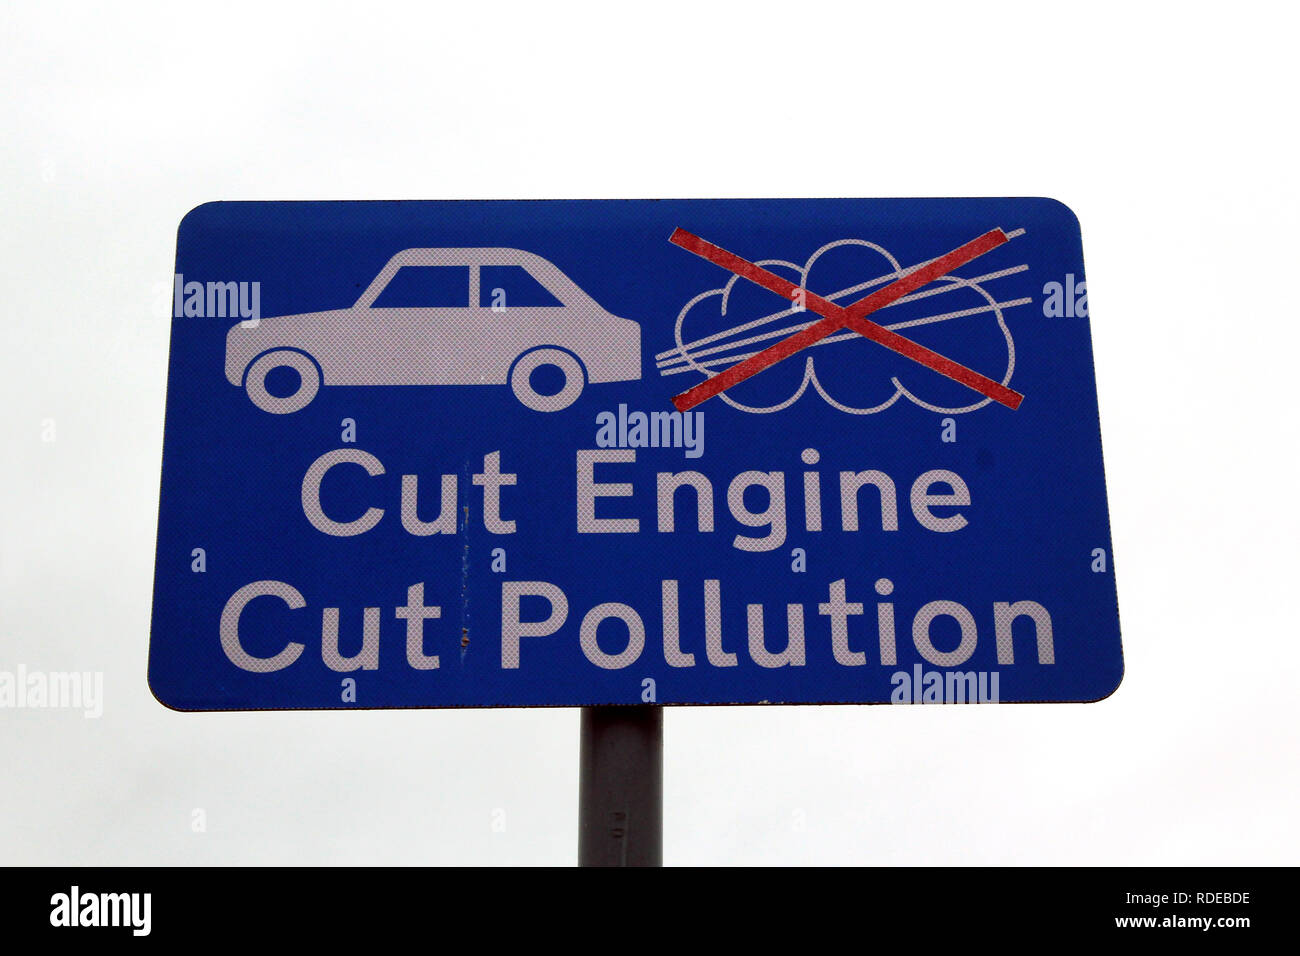 Cut engine car pollution traffic sign, UK Stock Photo